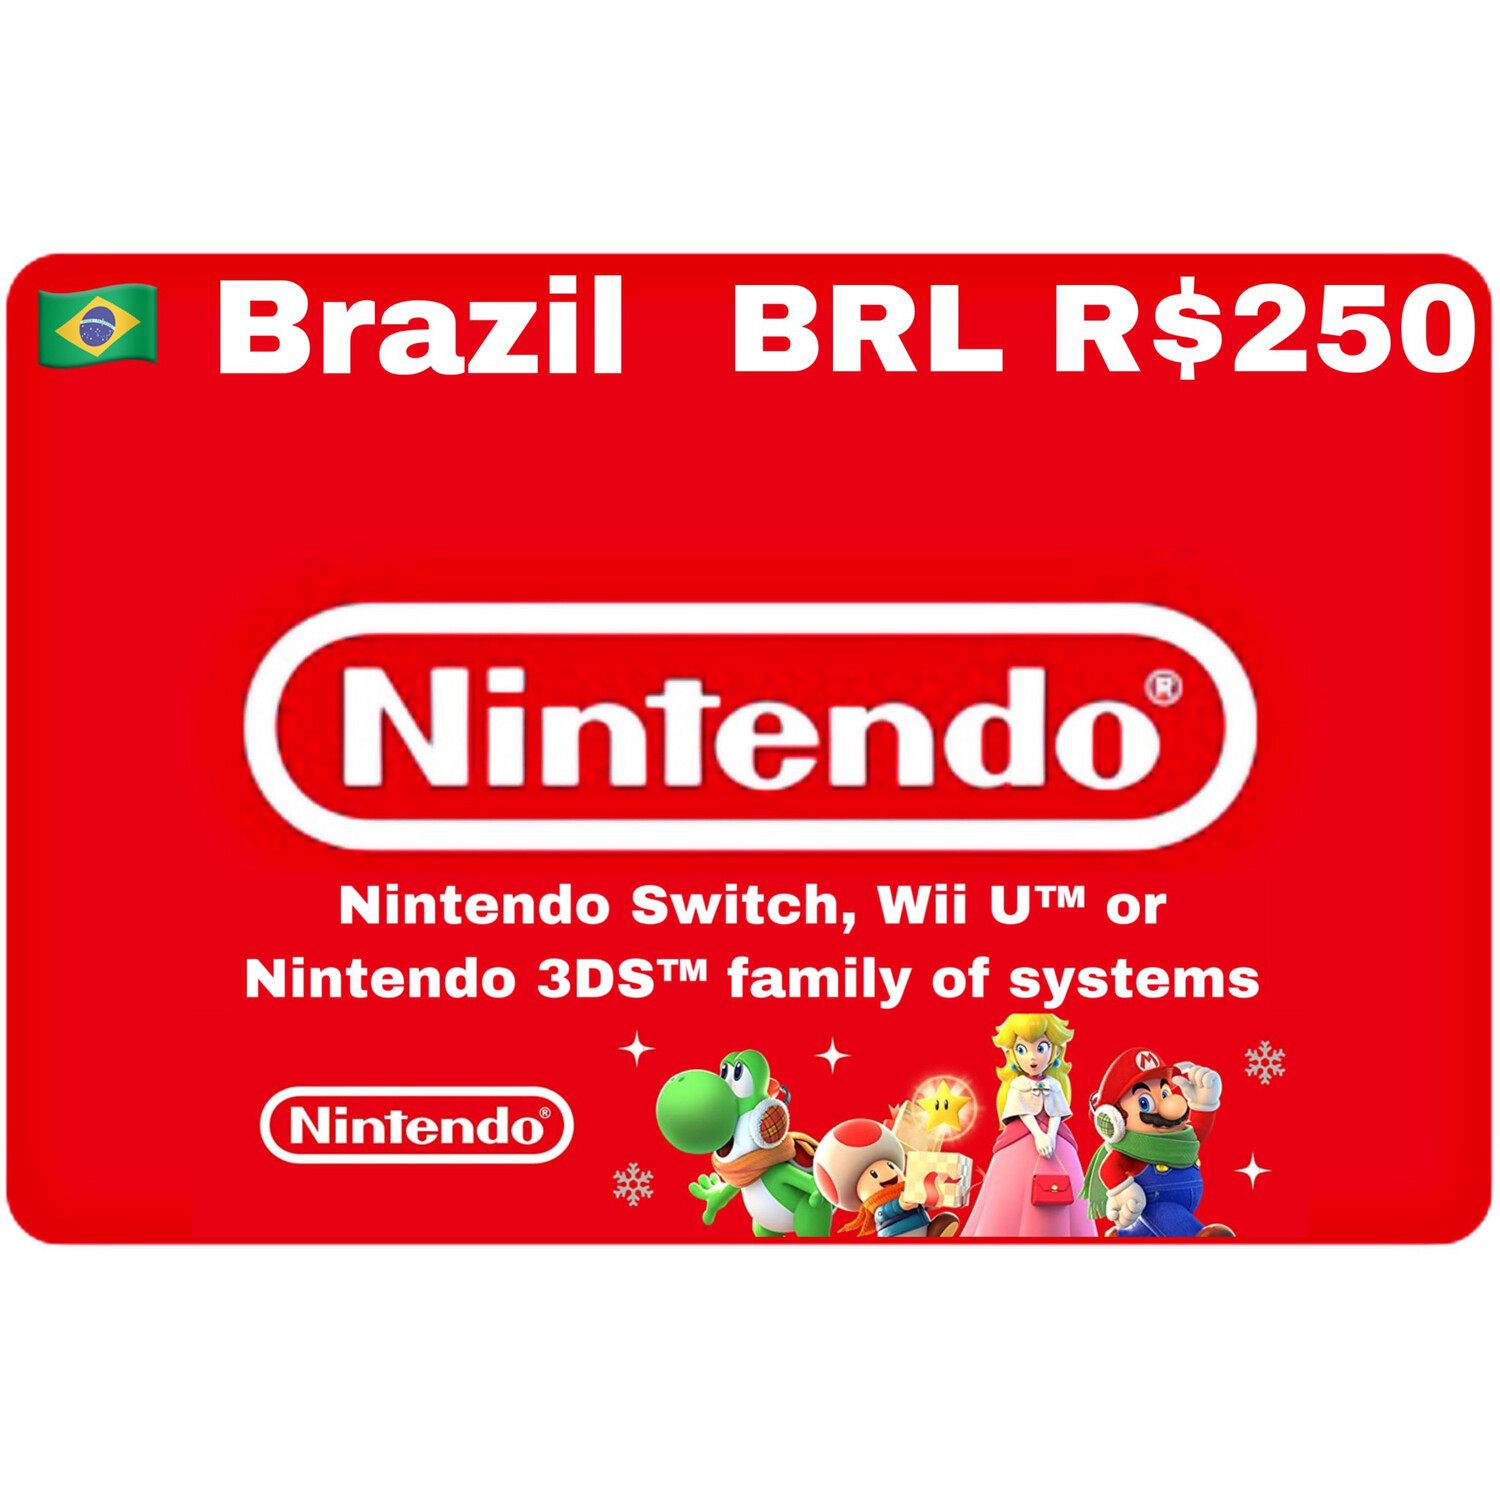 Nintendo eShop Brazil BRL R$250